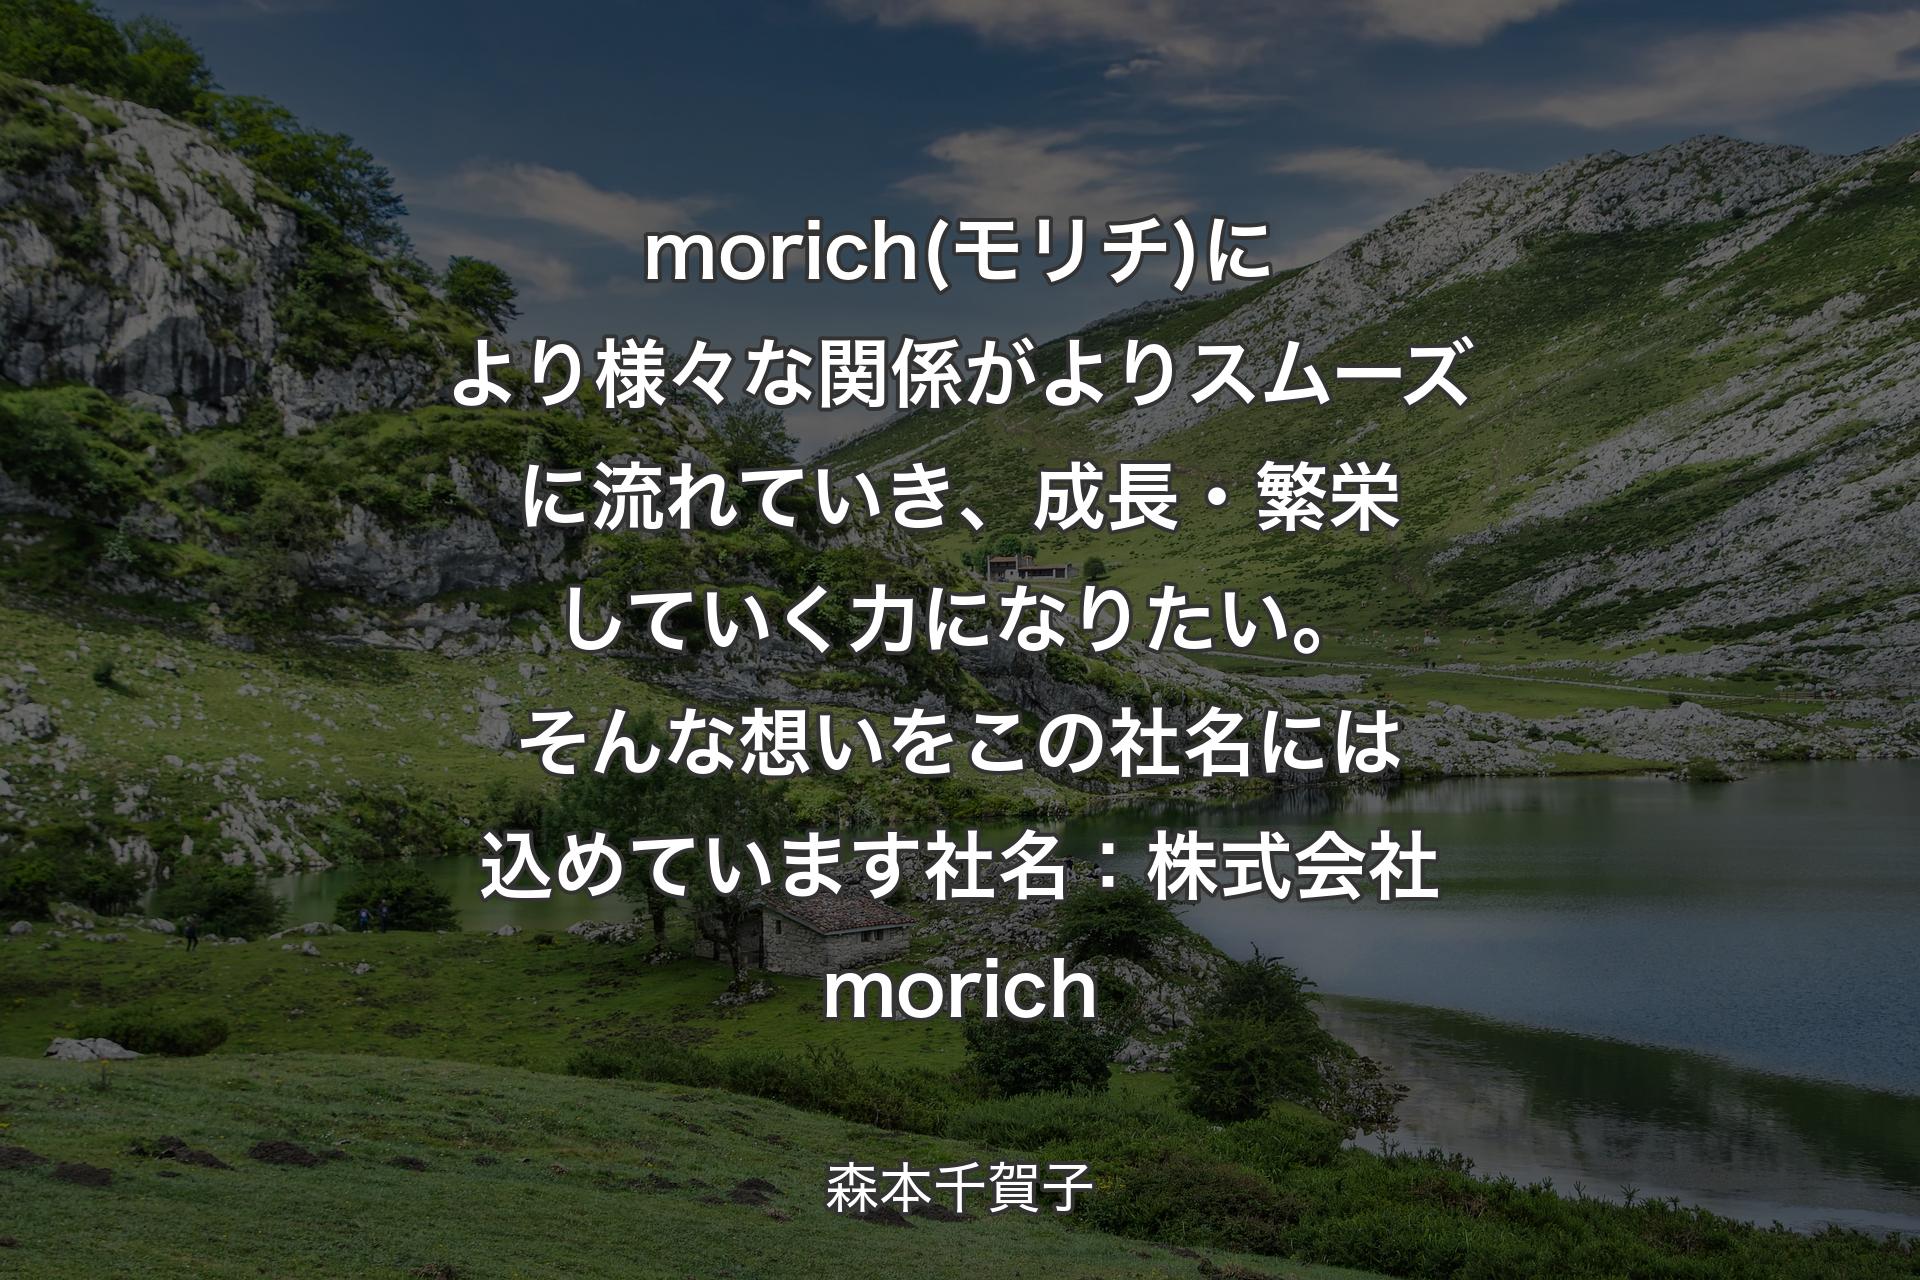 morich(モリチ)により様々な関係がよりスムーズに流れていき、成長・繁栄していく力になりたい。そんな想いをこの社名には込めています社名：株式会社morich - 森本千賀子